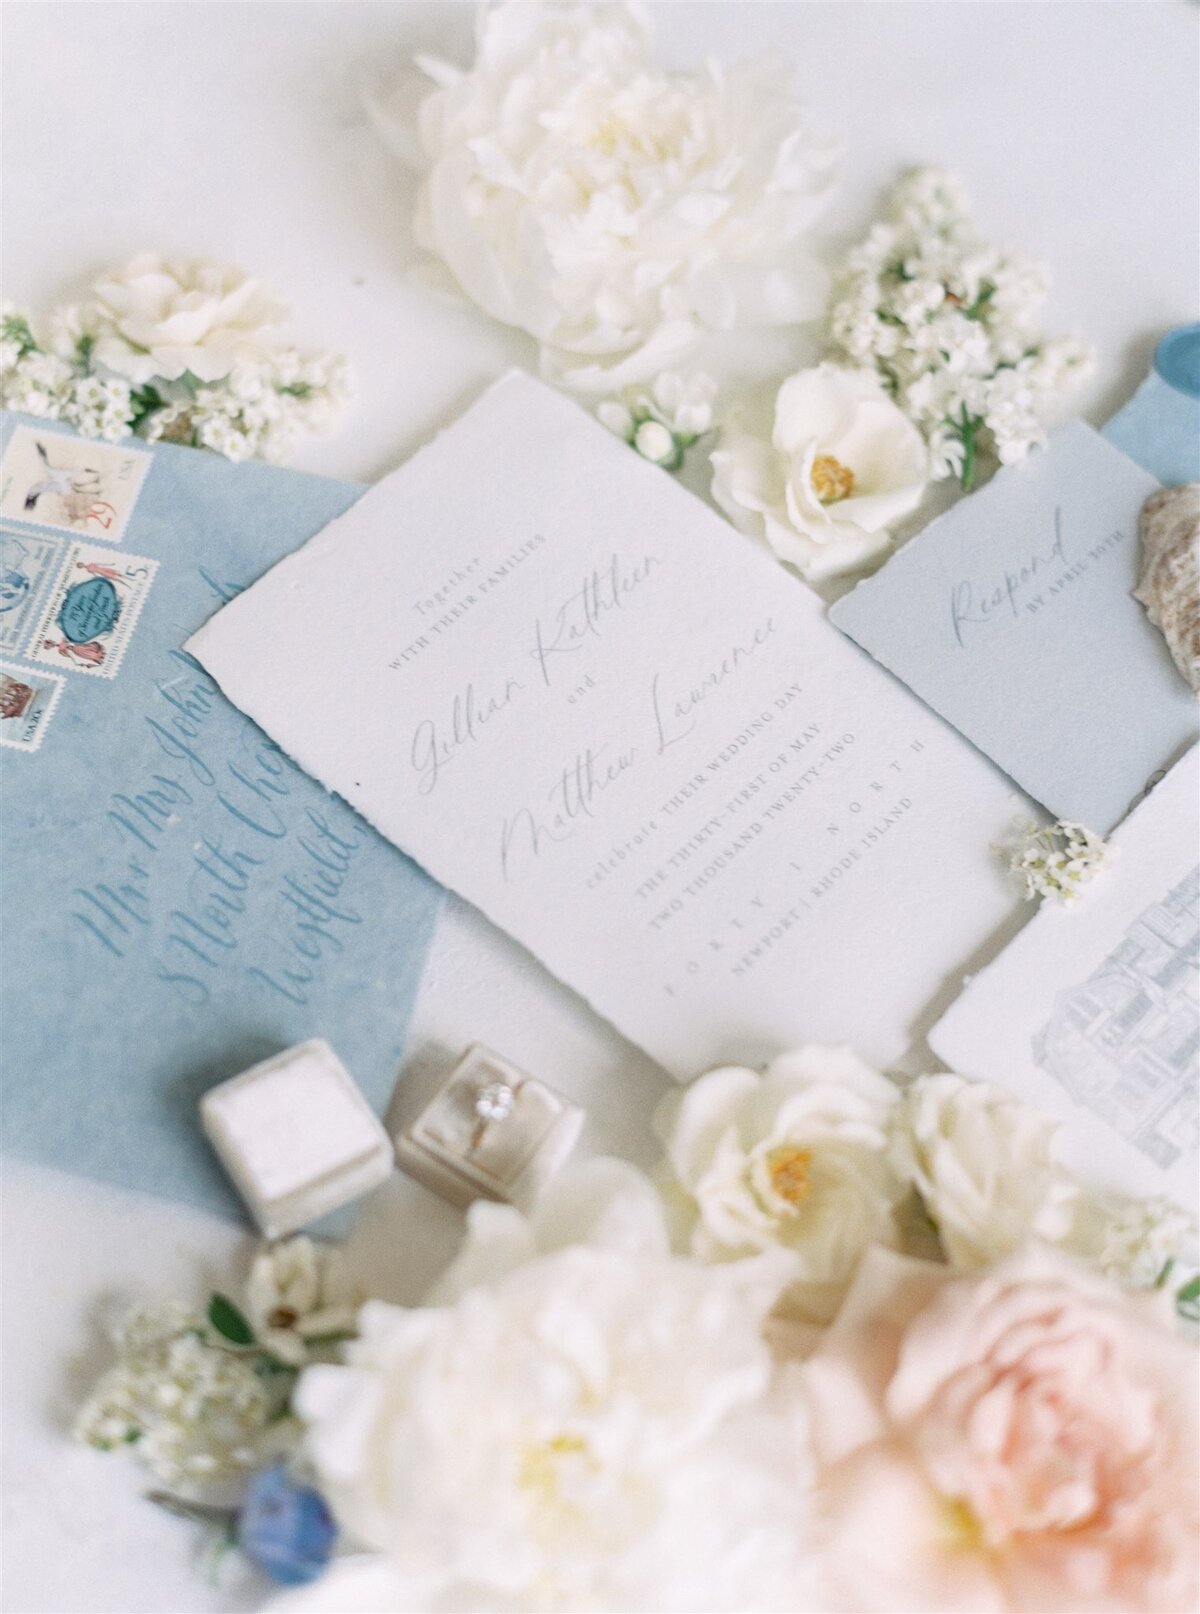 Kate-Murtaugh-Events-Newport-RI-letterpress-blue-oyster-handmade-paper-stationery-wedding-planner